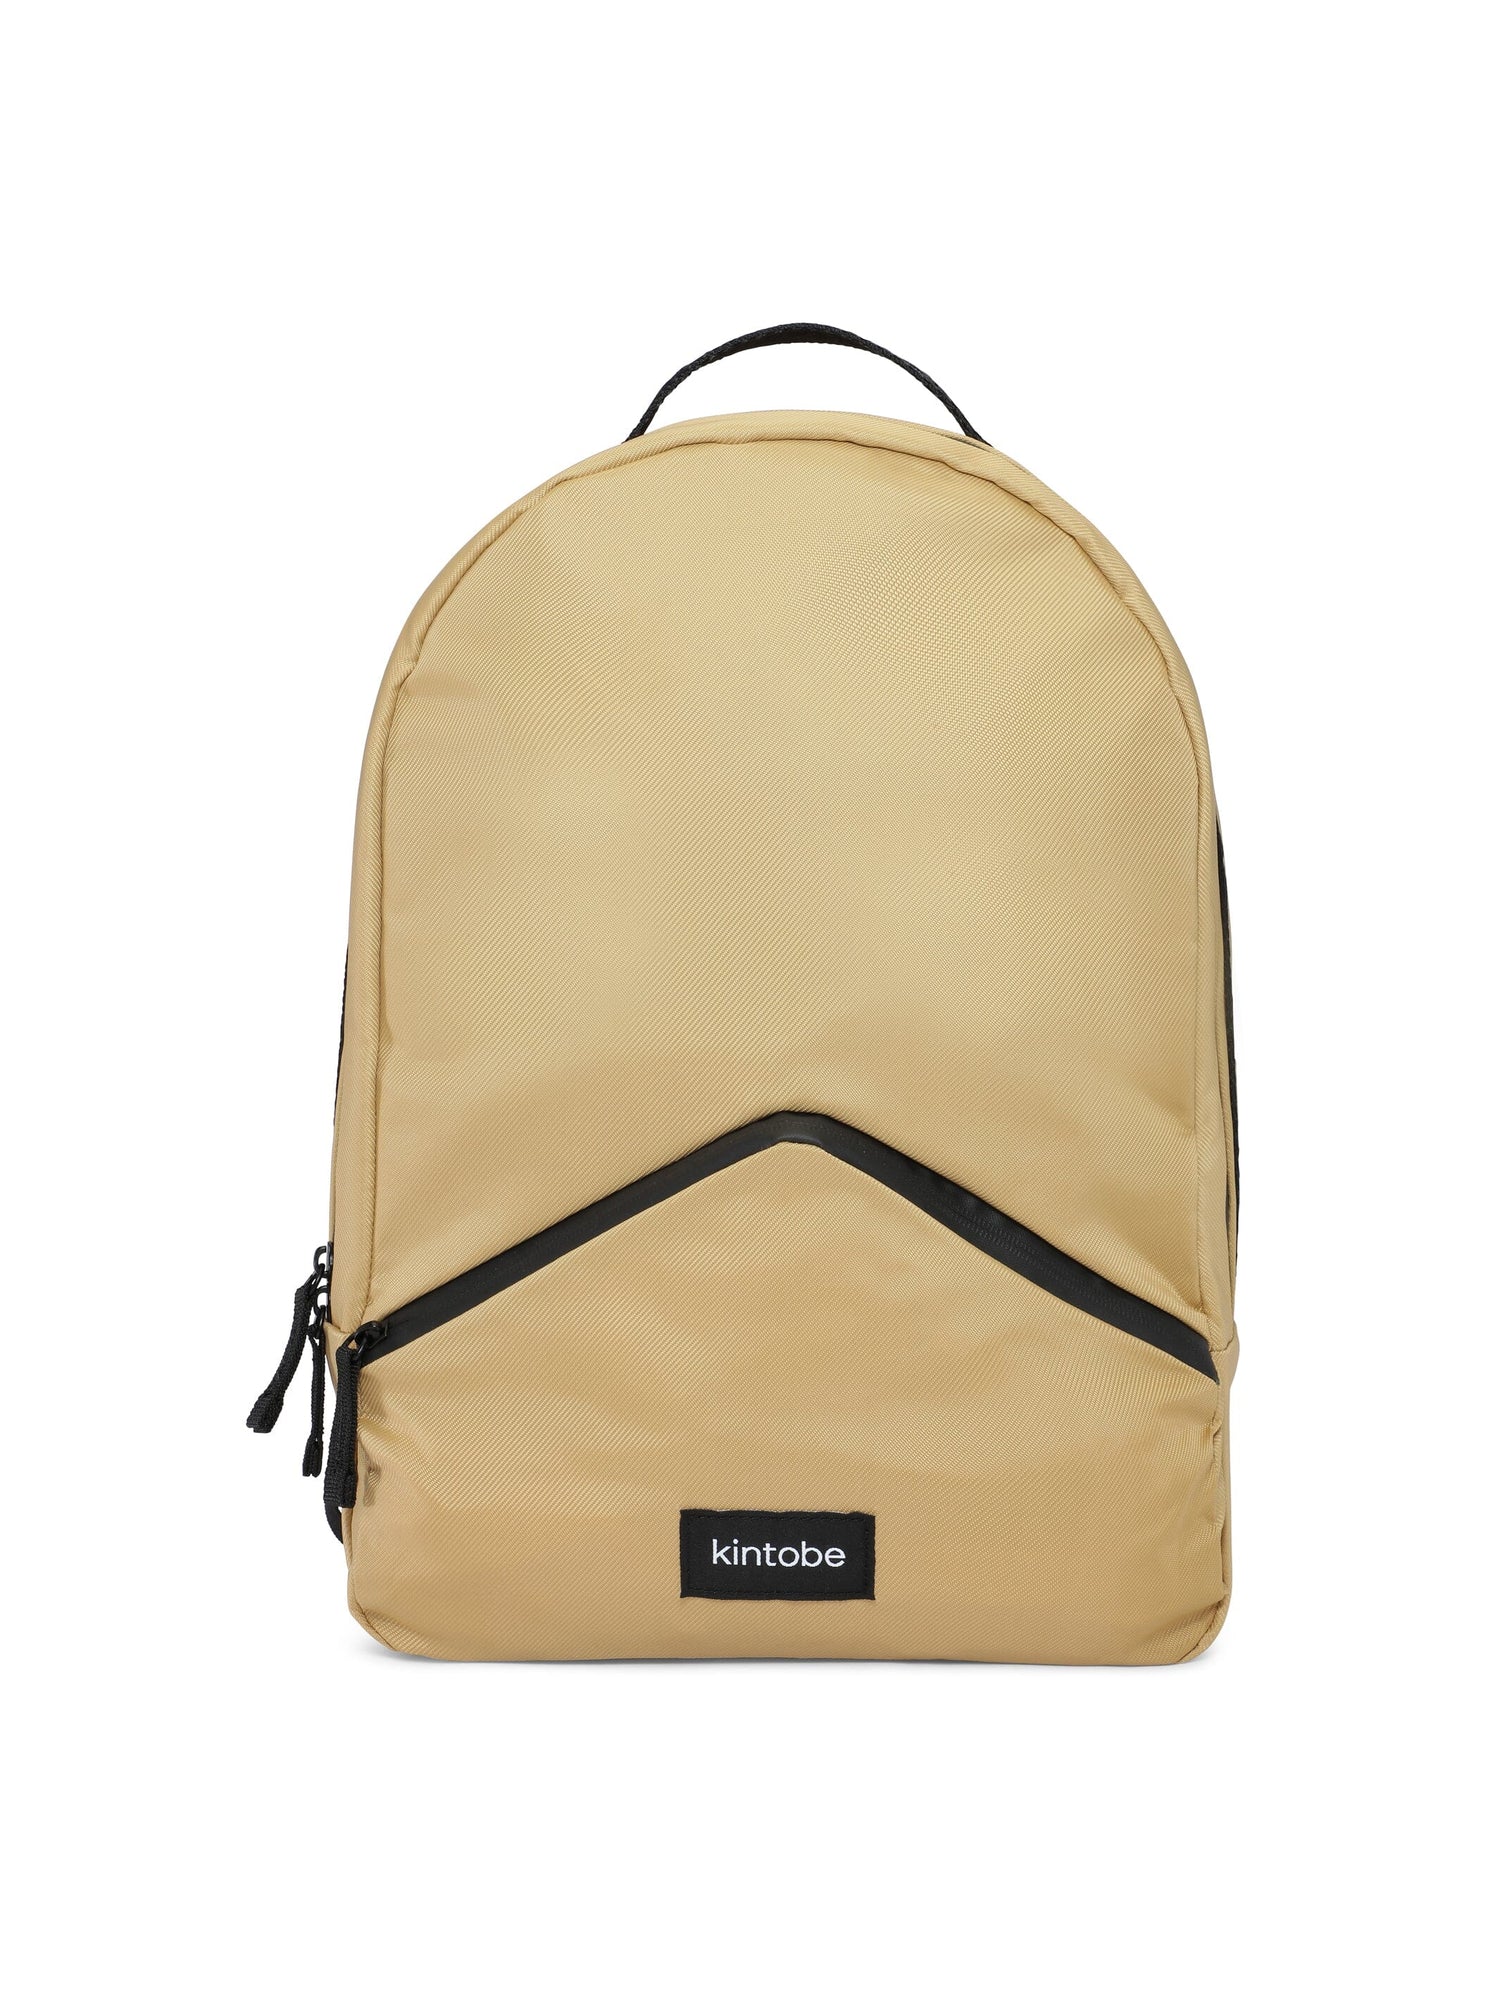 Kintobe Hugo Backpack - Recycled Nylon Sand Bags